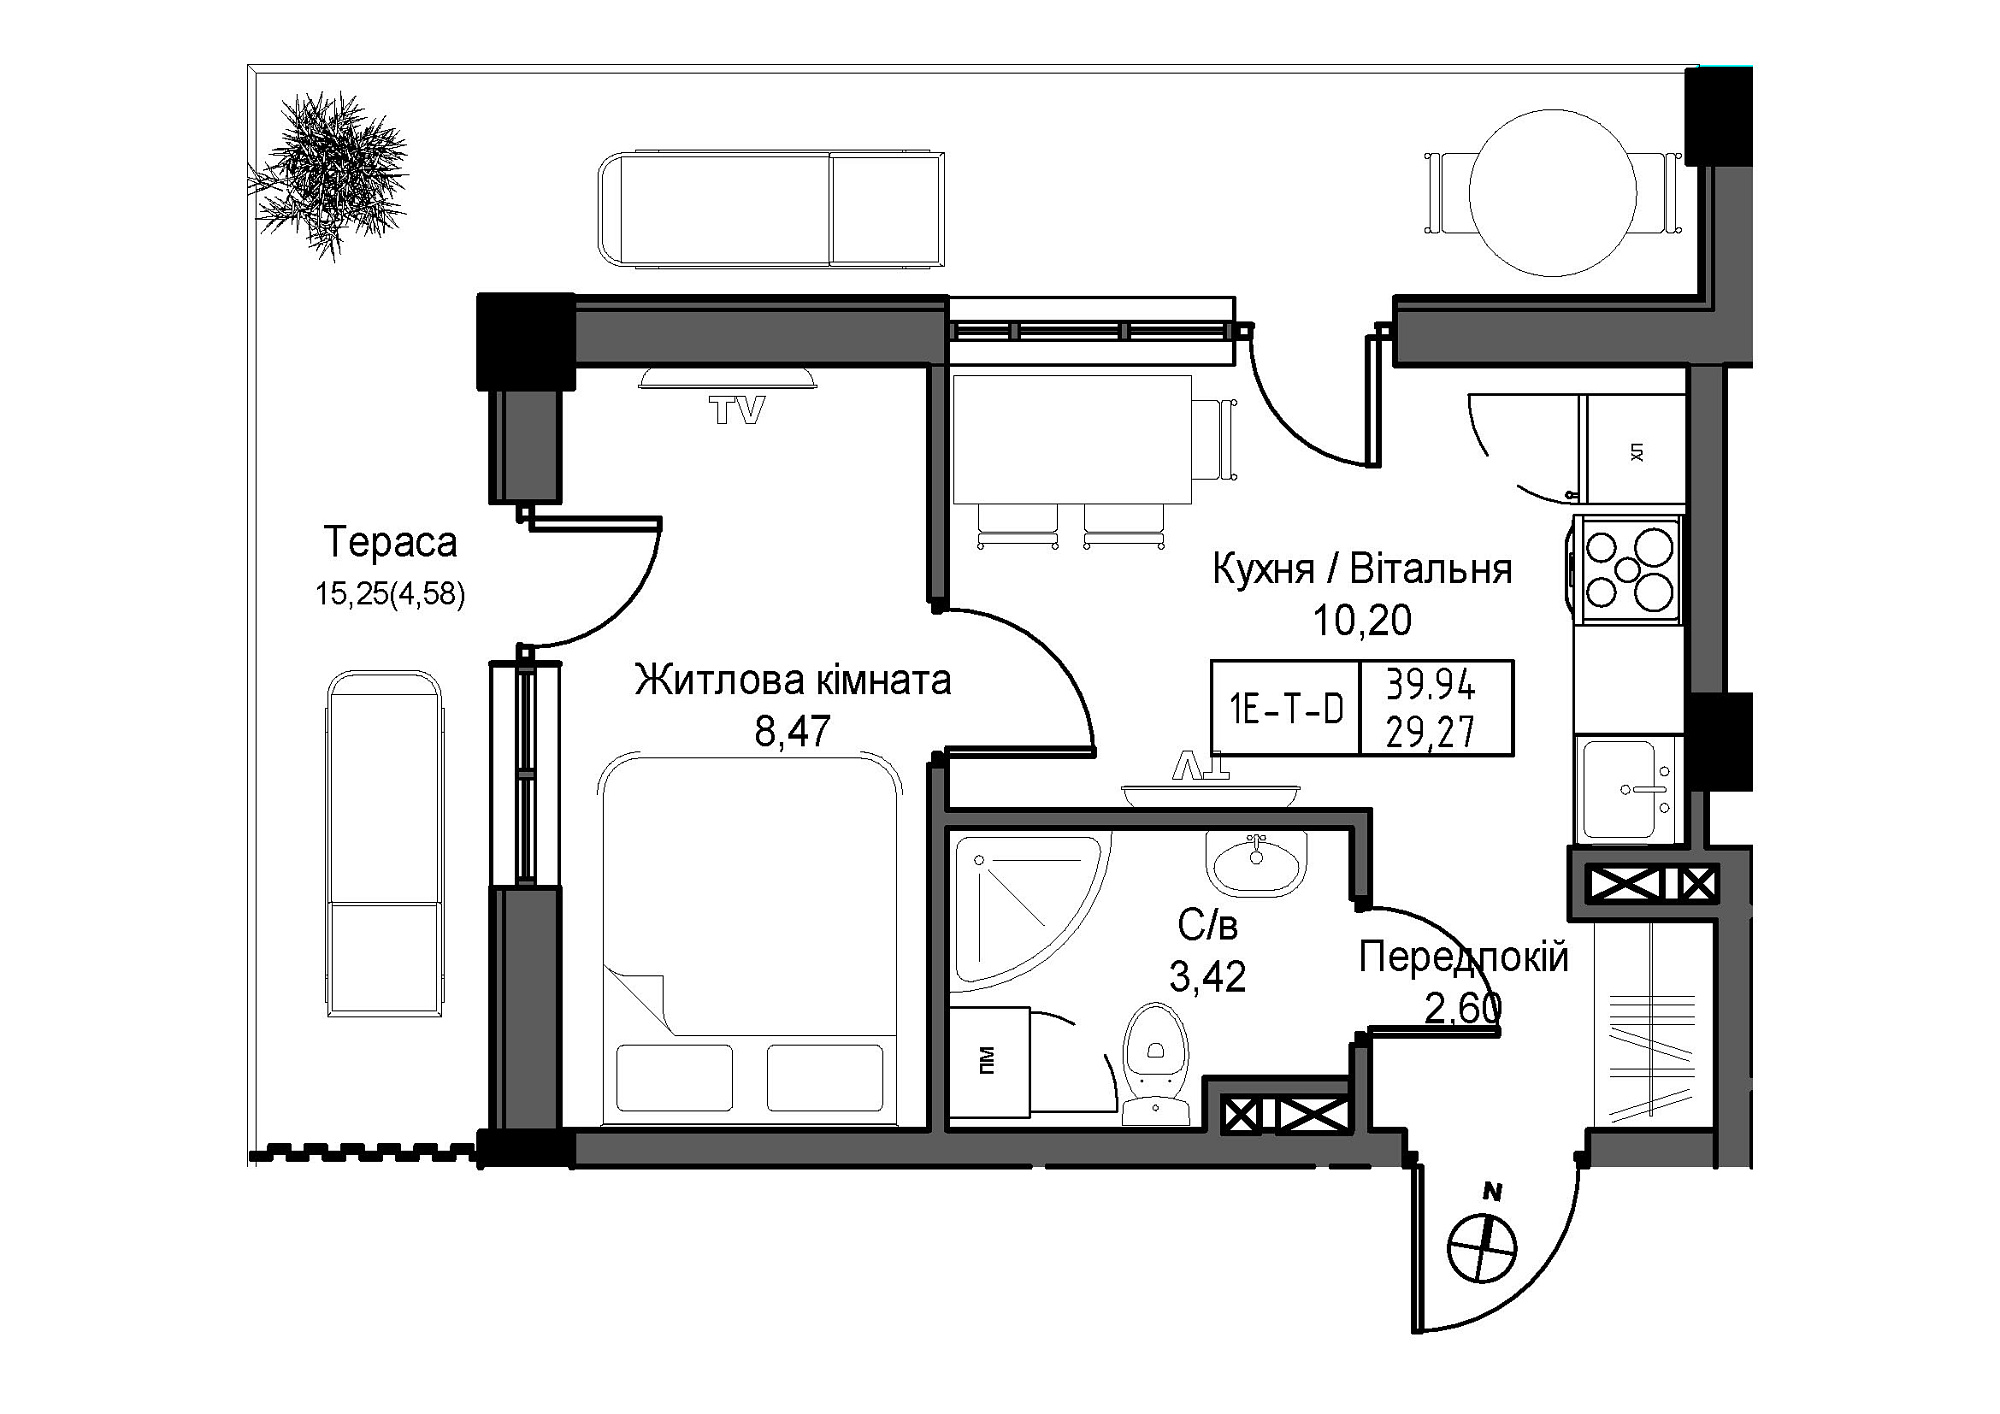 Планування 1-к квартира площею 29.27м2, UM-007-08/0002.